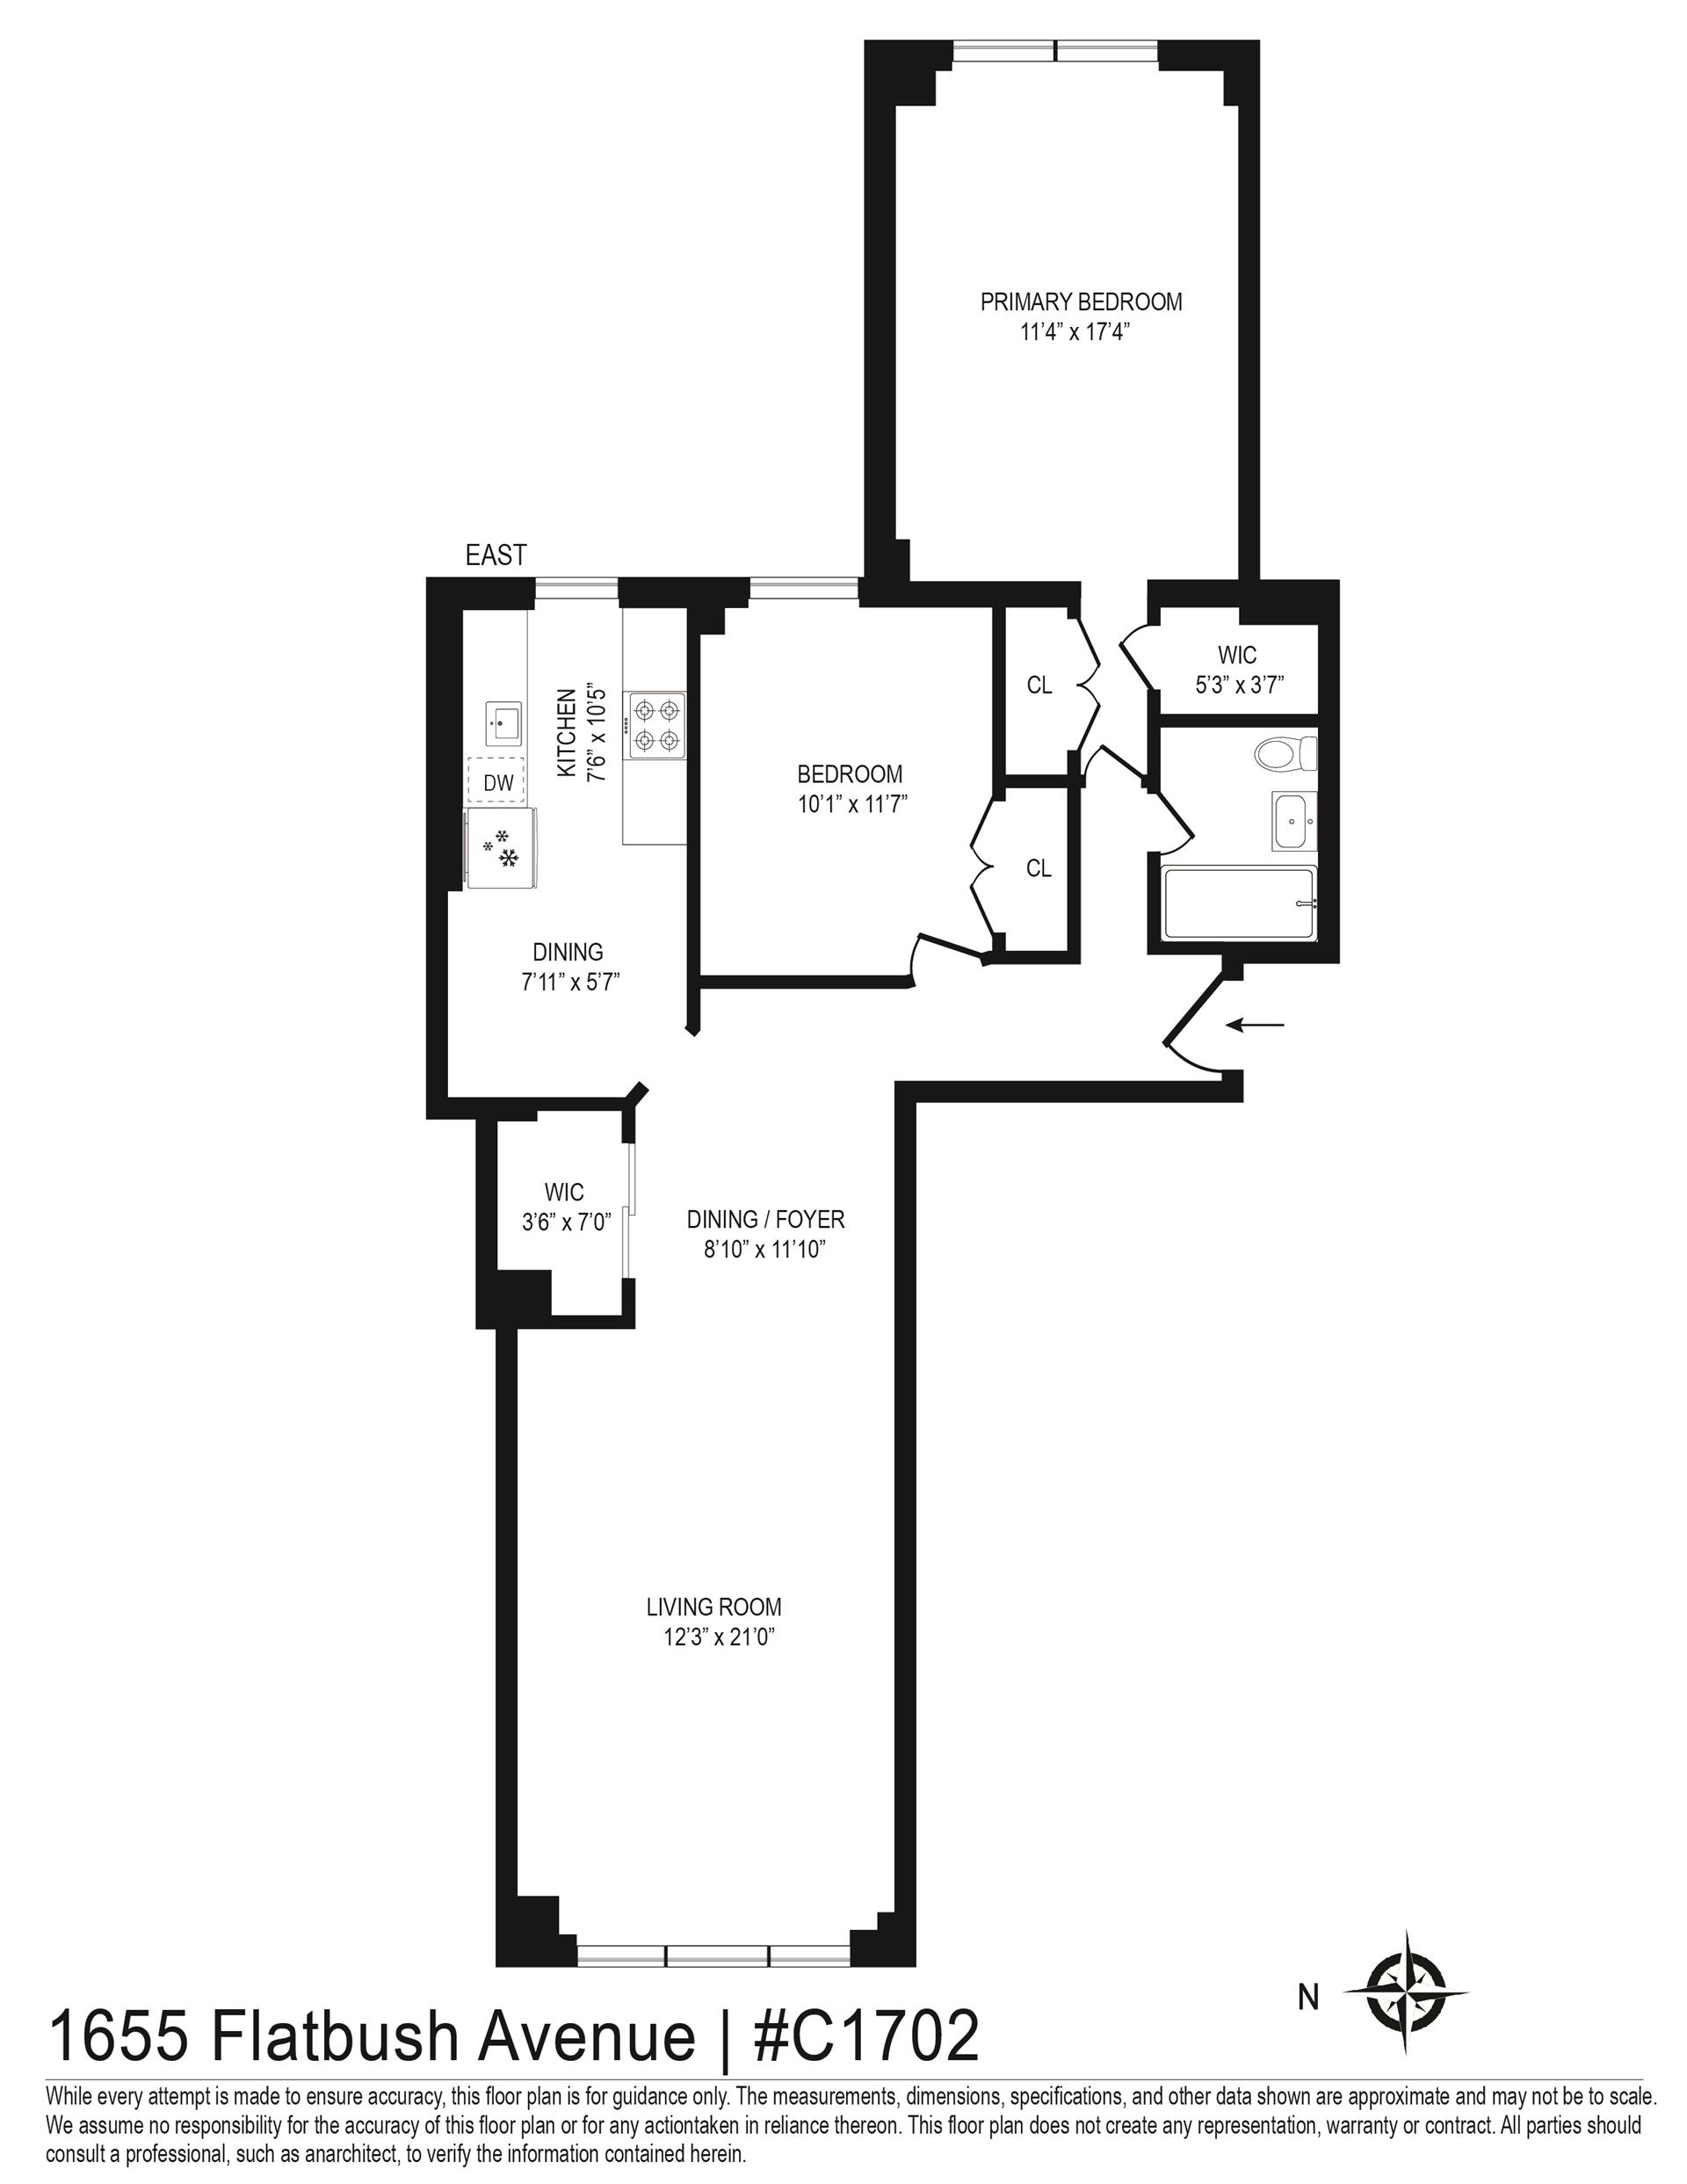 Floorplan for 1655 Flatbush Avenue, C1702